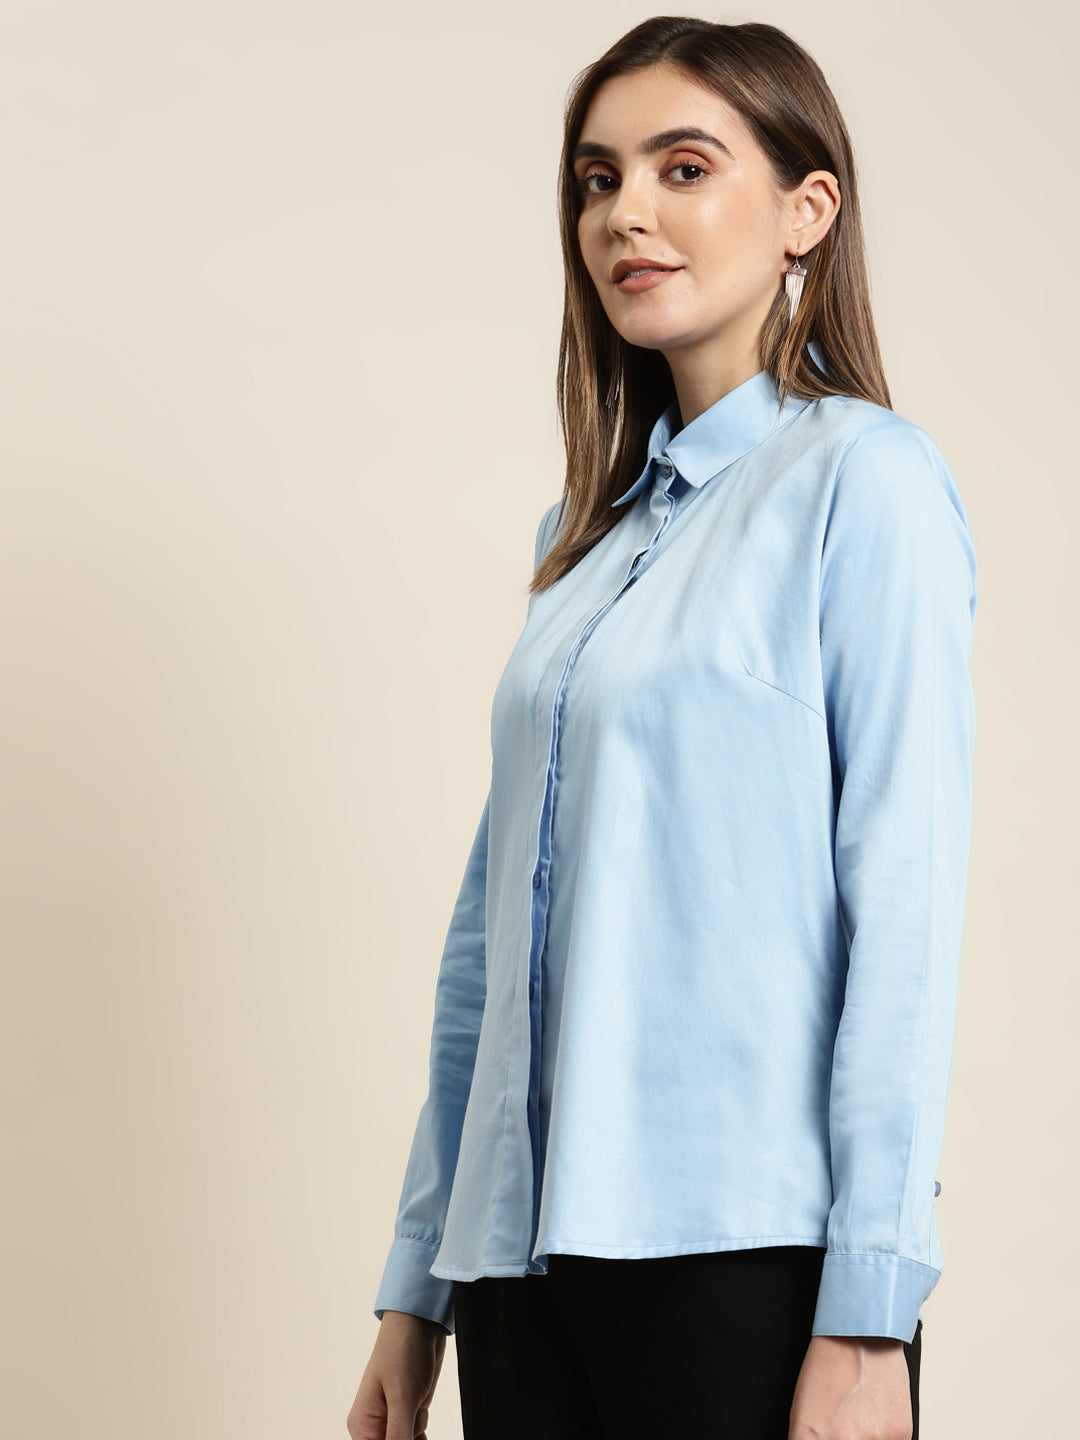 Buy Lady Bird Women Long Sleeve Denim Shirt, Light Blue, Large Size at  Amazon.in